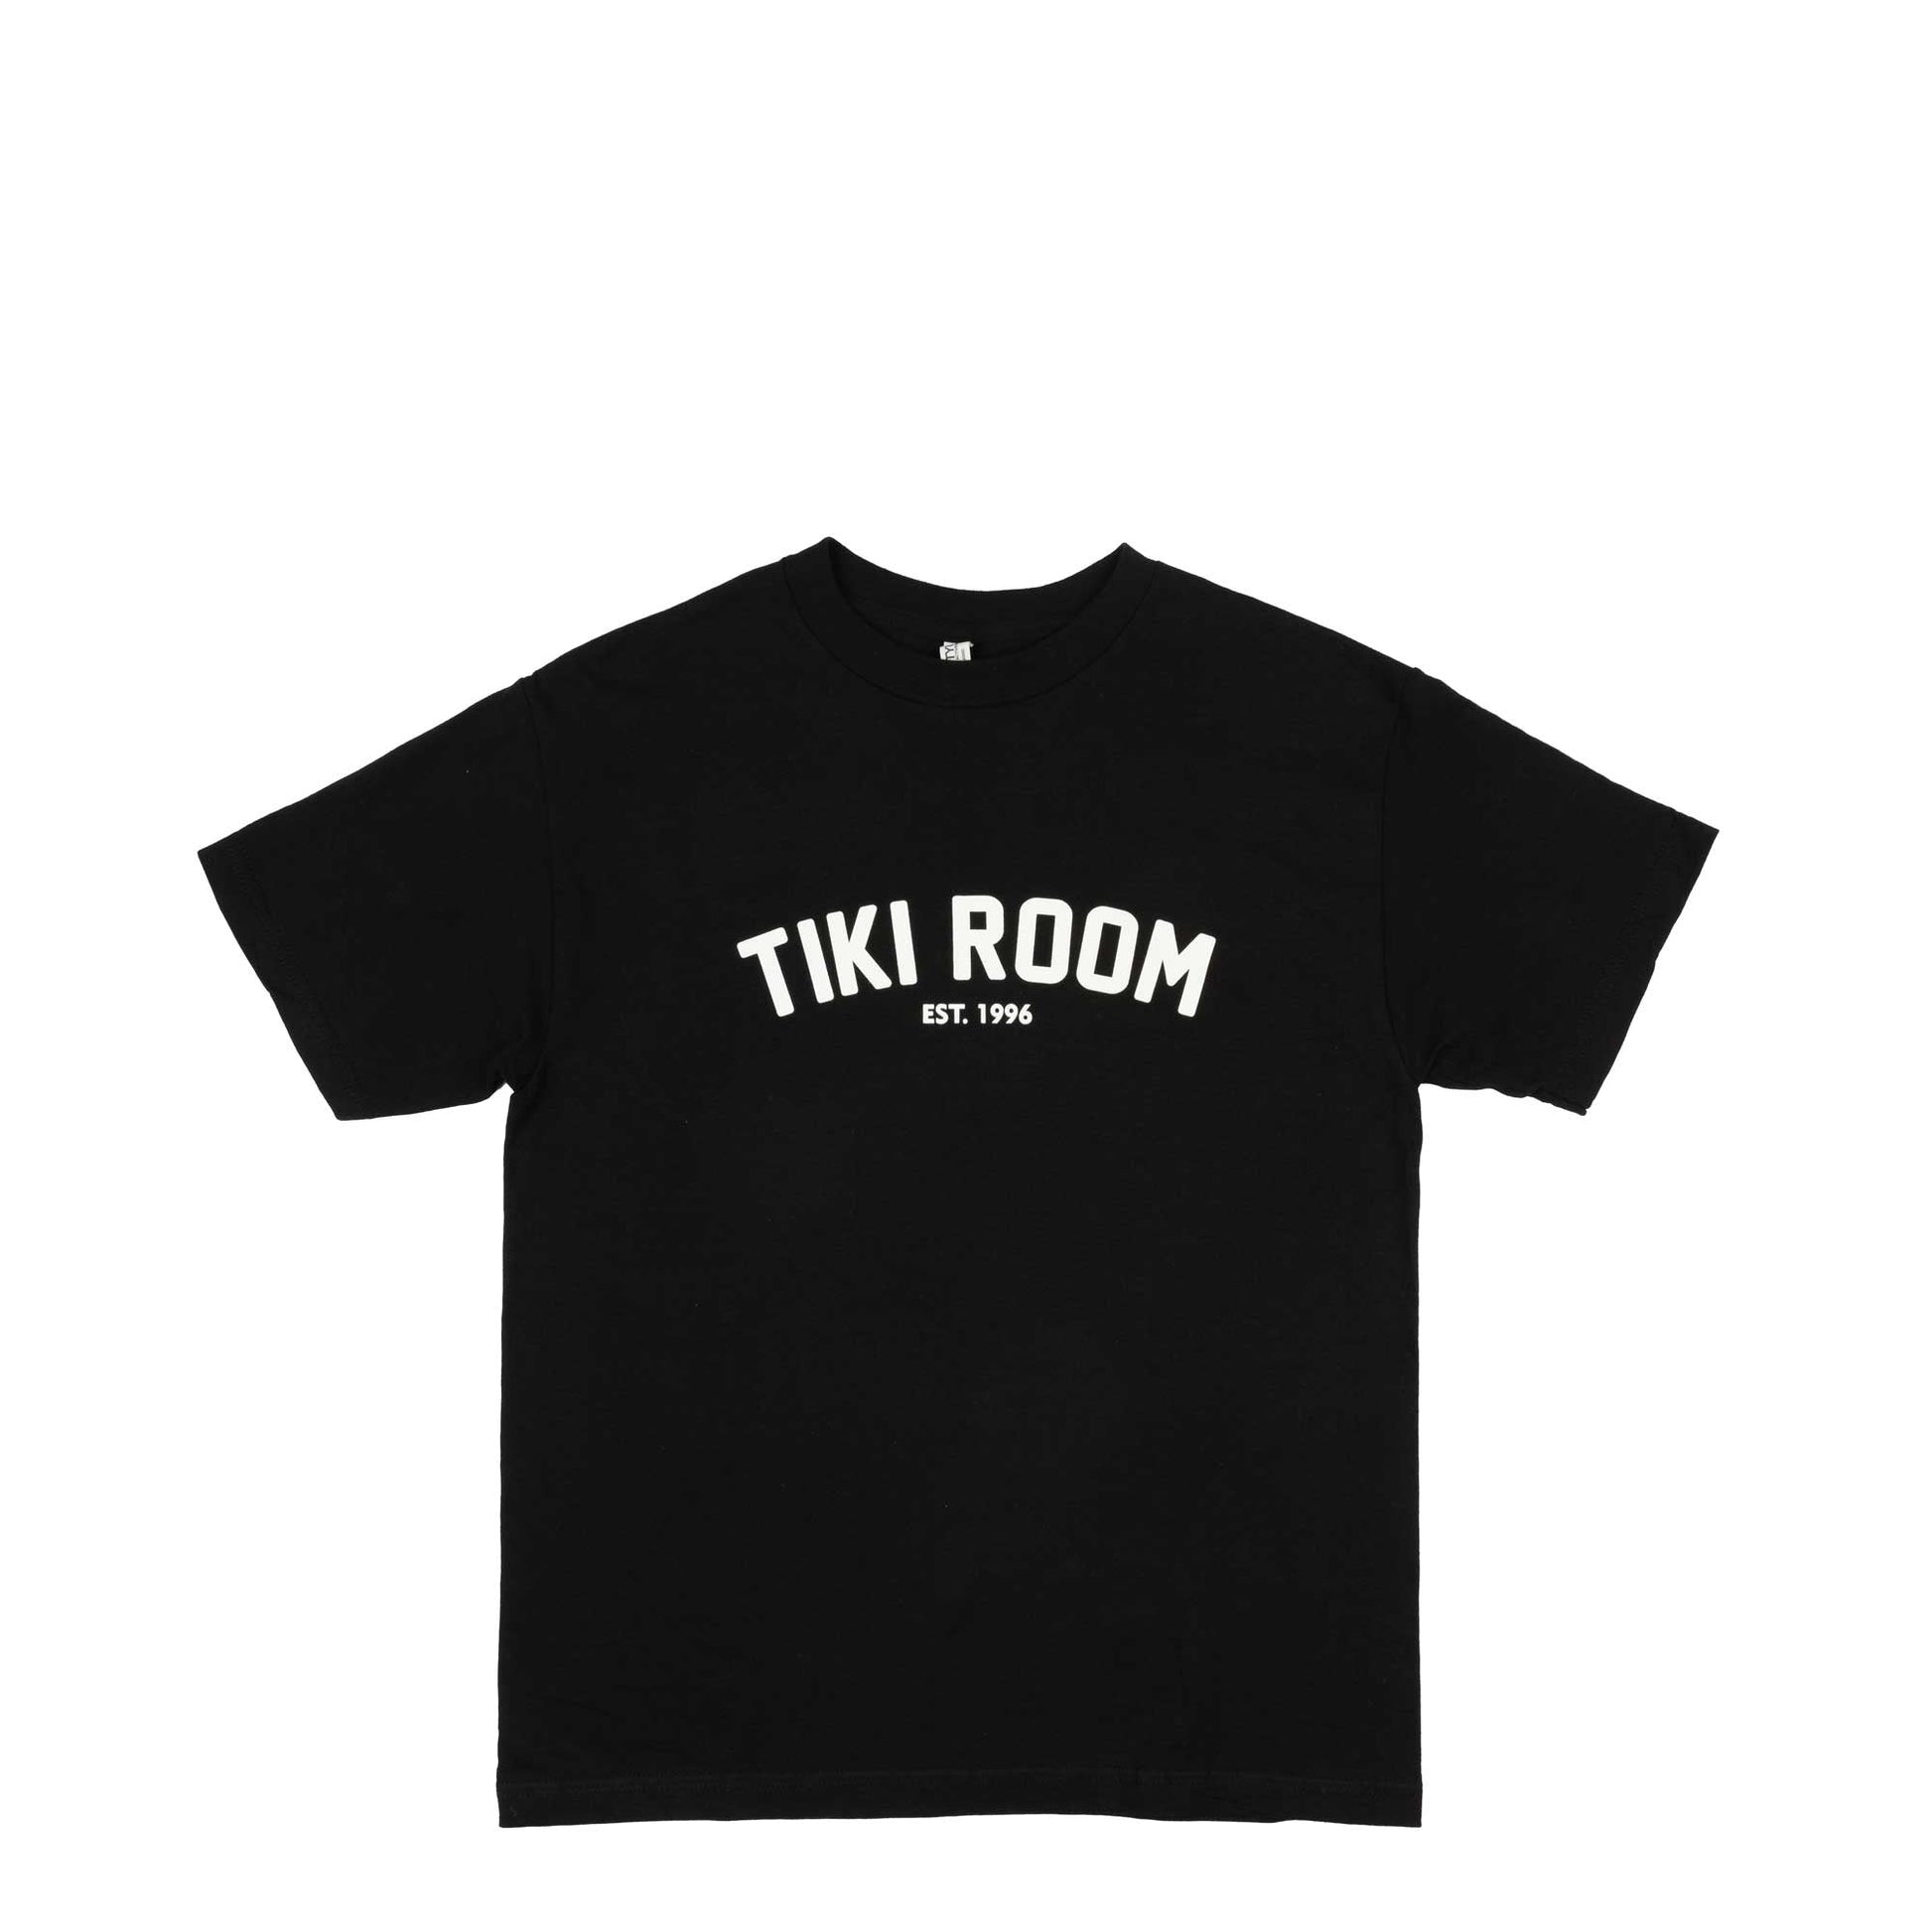 Tiki Room Arch Logo Tee, black - Tiki Room Skateboards - 1